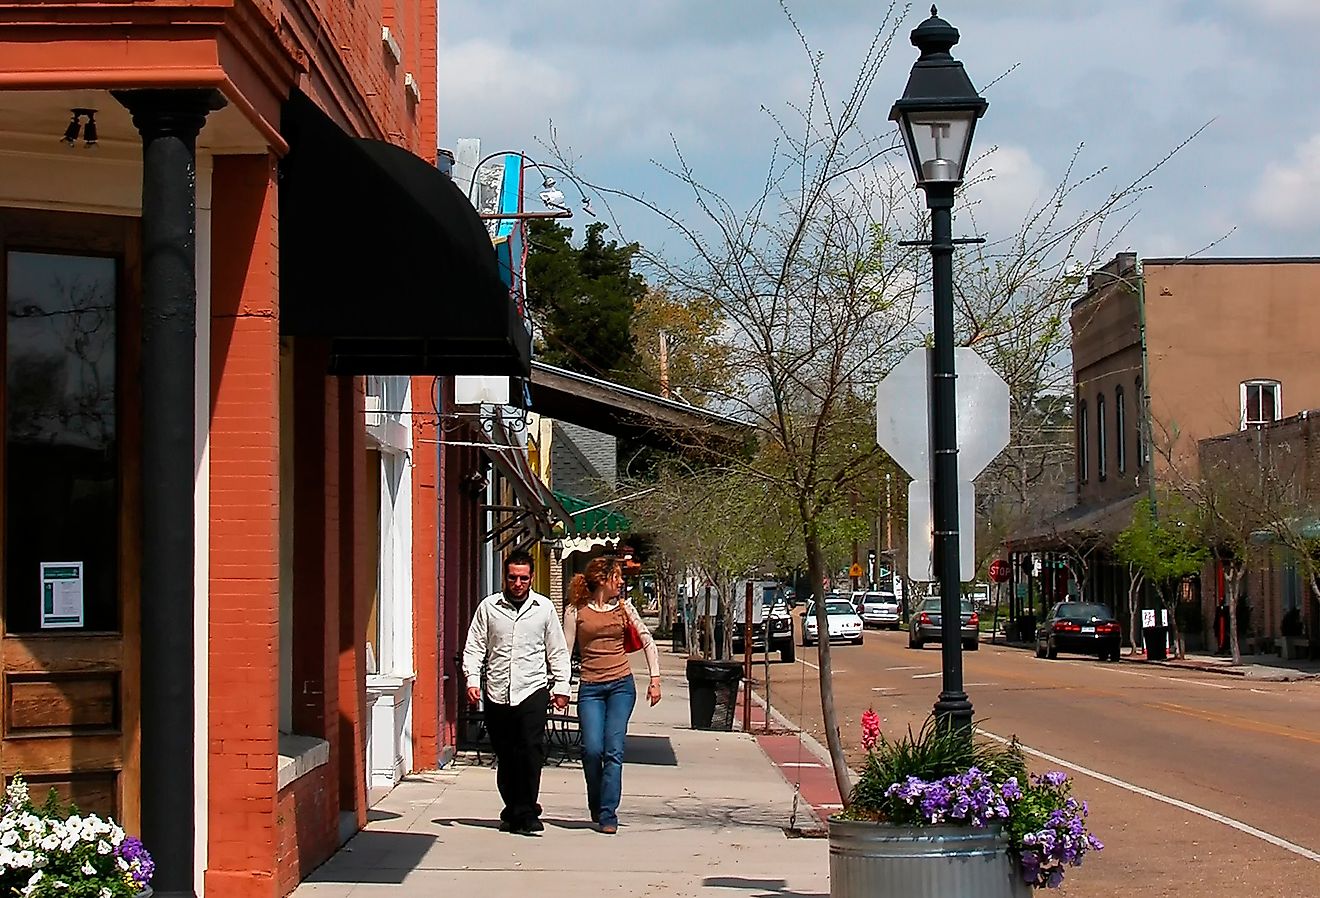 Couple strolling on Columbia Street in Covington, Louisiana. Image credit Malachi Jacobs via Shutterstock